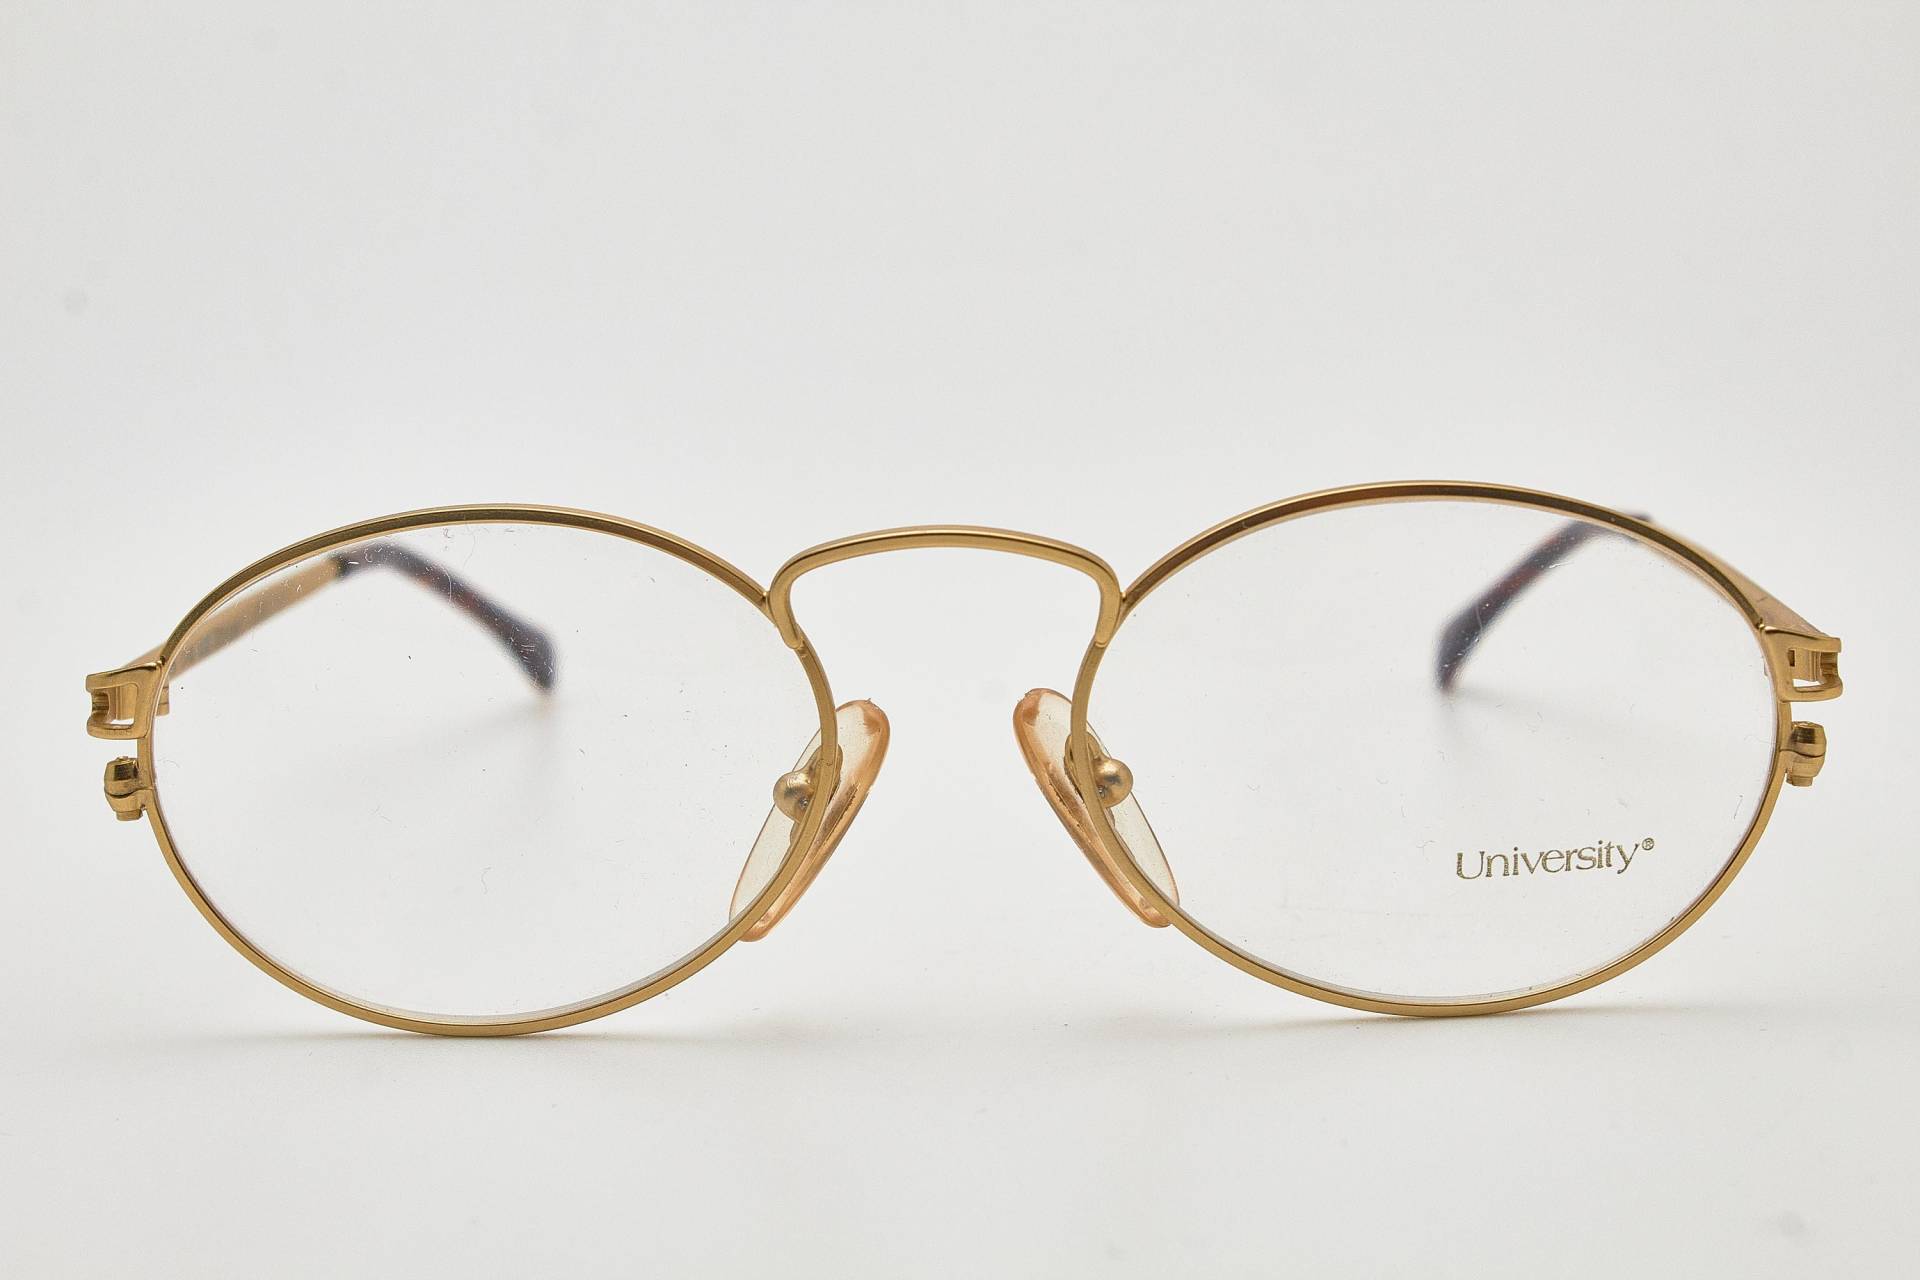 Filos 6145 Gold Ovale Brille-Goldene Brille-Ovale Brille-Vintage Brille-Für Goldene Sonnenbrillen-Ovale Brille 1980Er Jahre-Gold Brillen von VintageGlassesVault